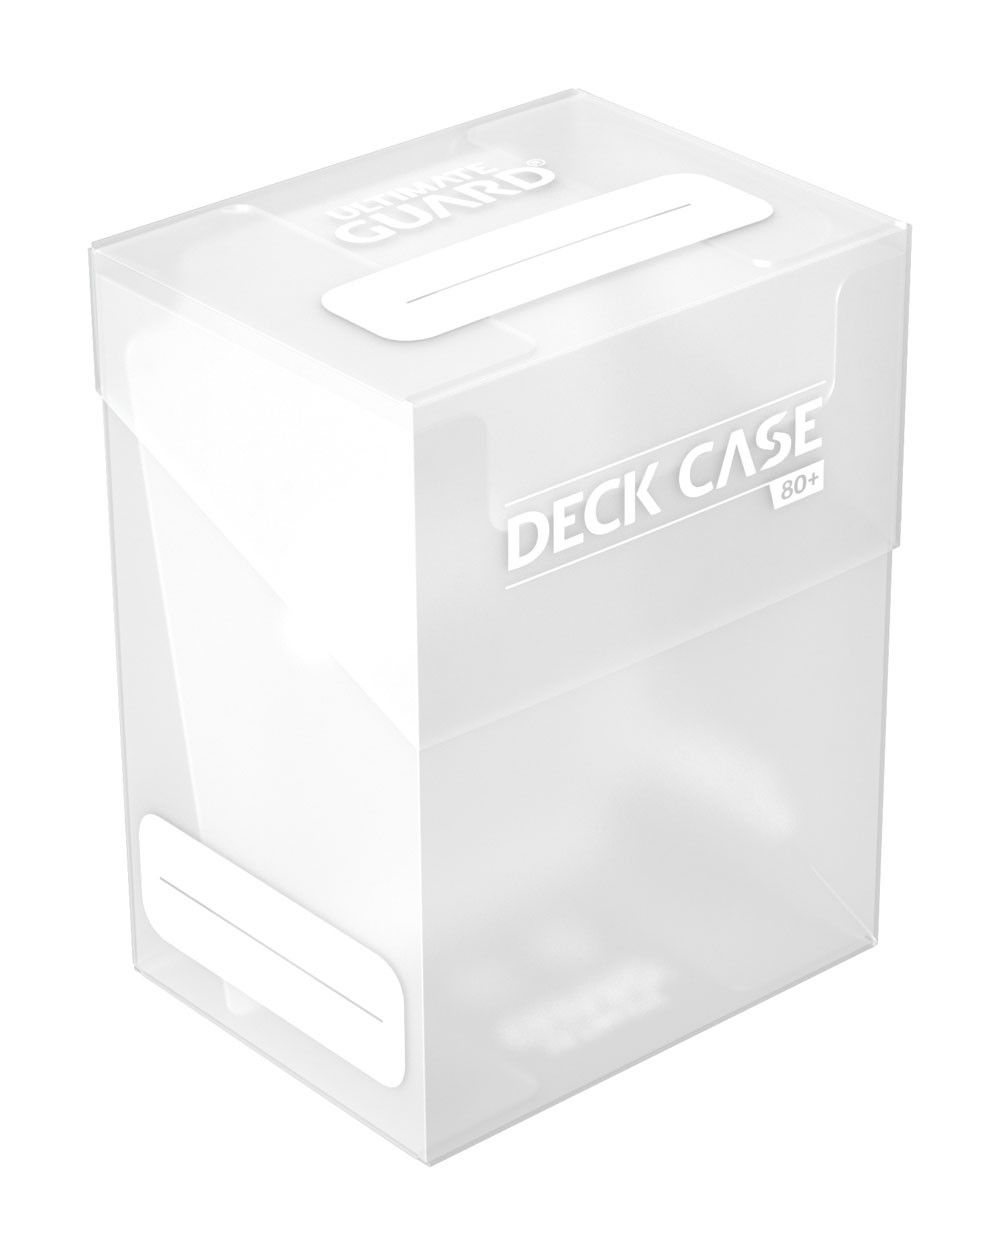 UltraPro - Deck box 80+ Taille standard - Aqua